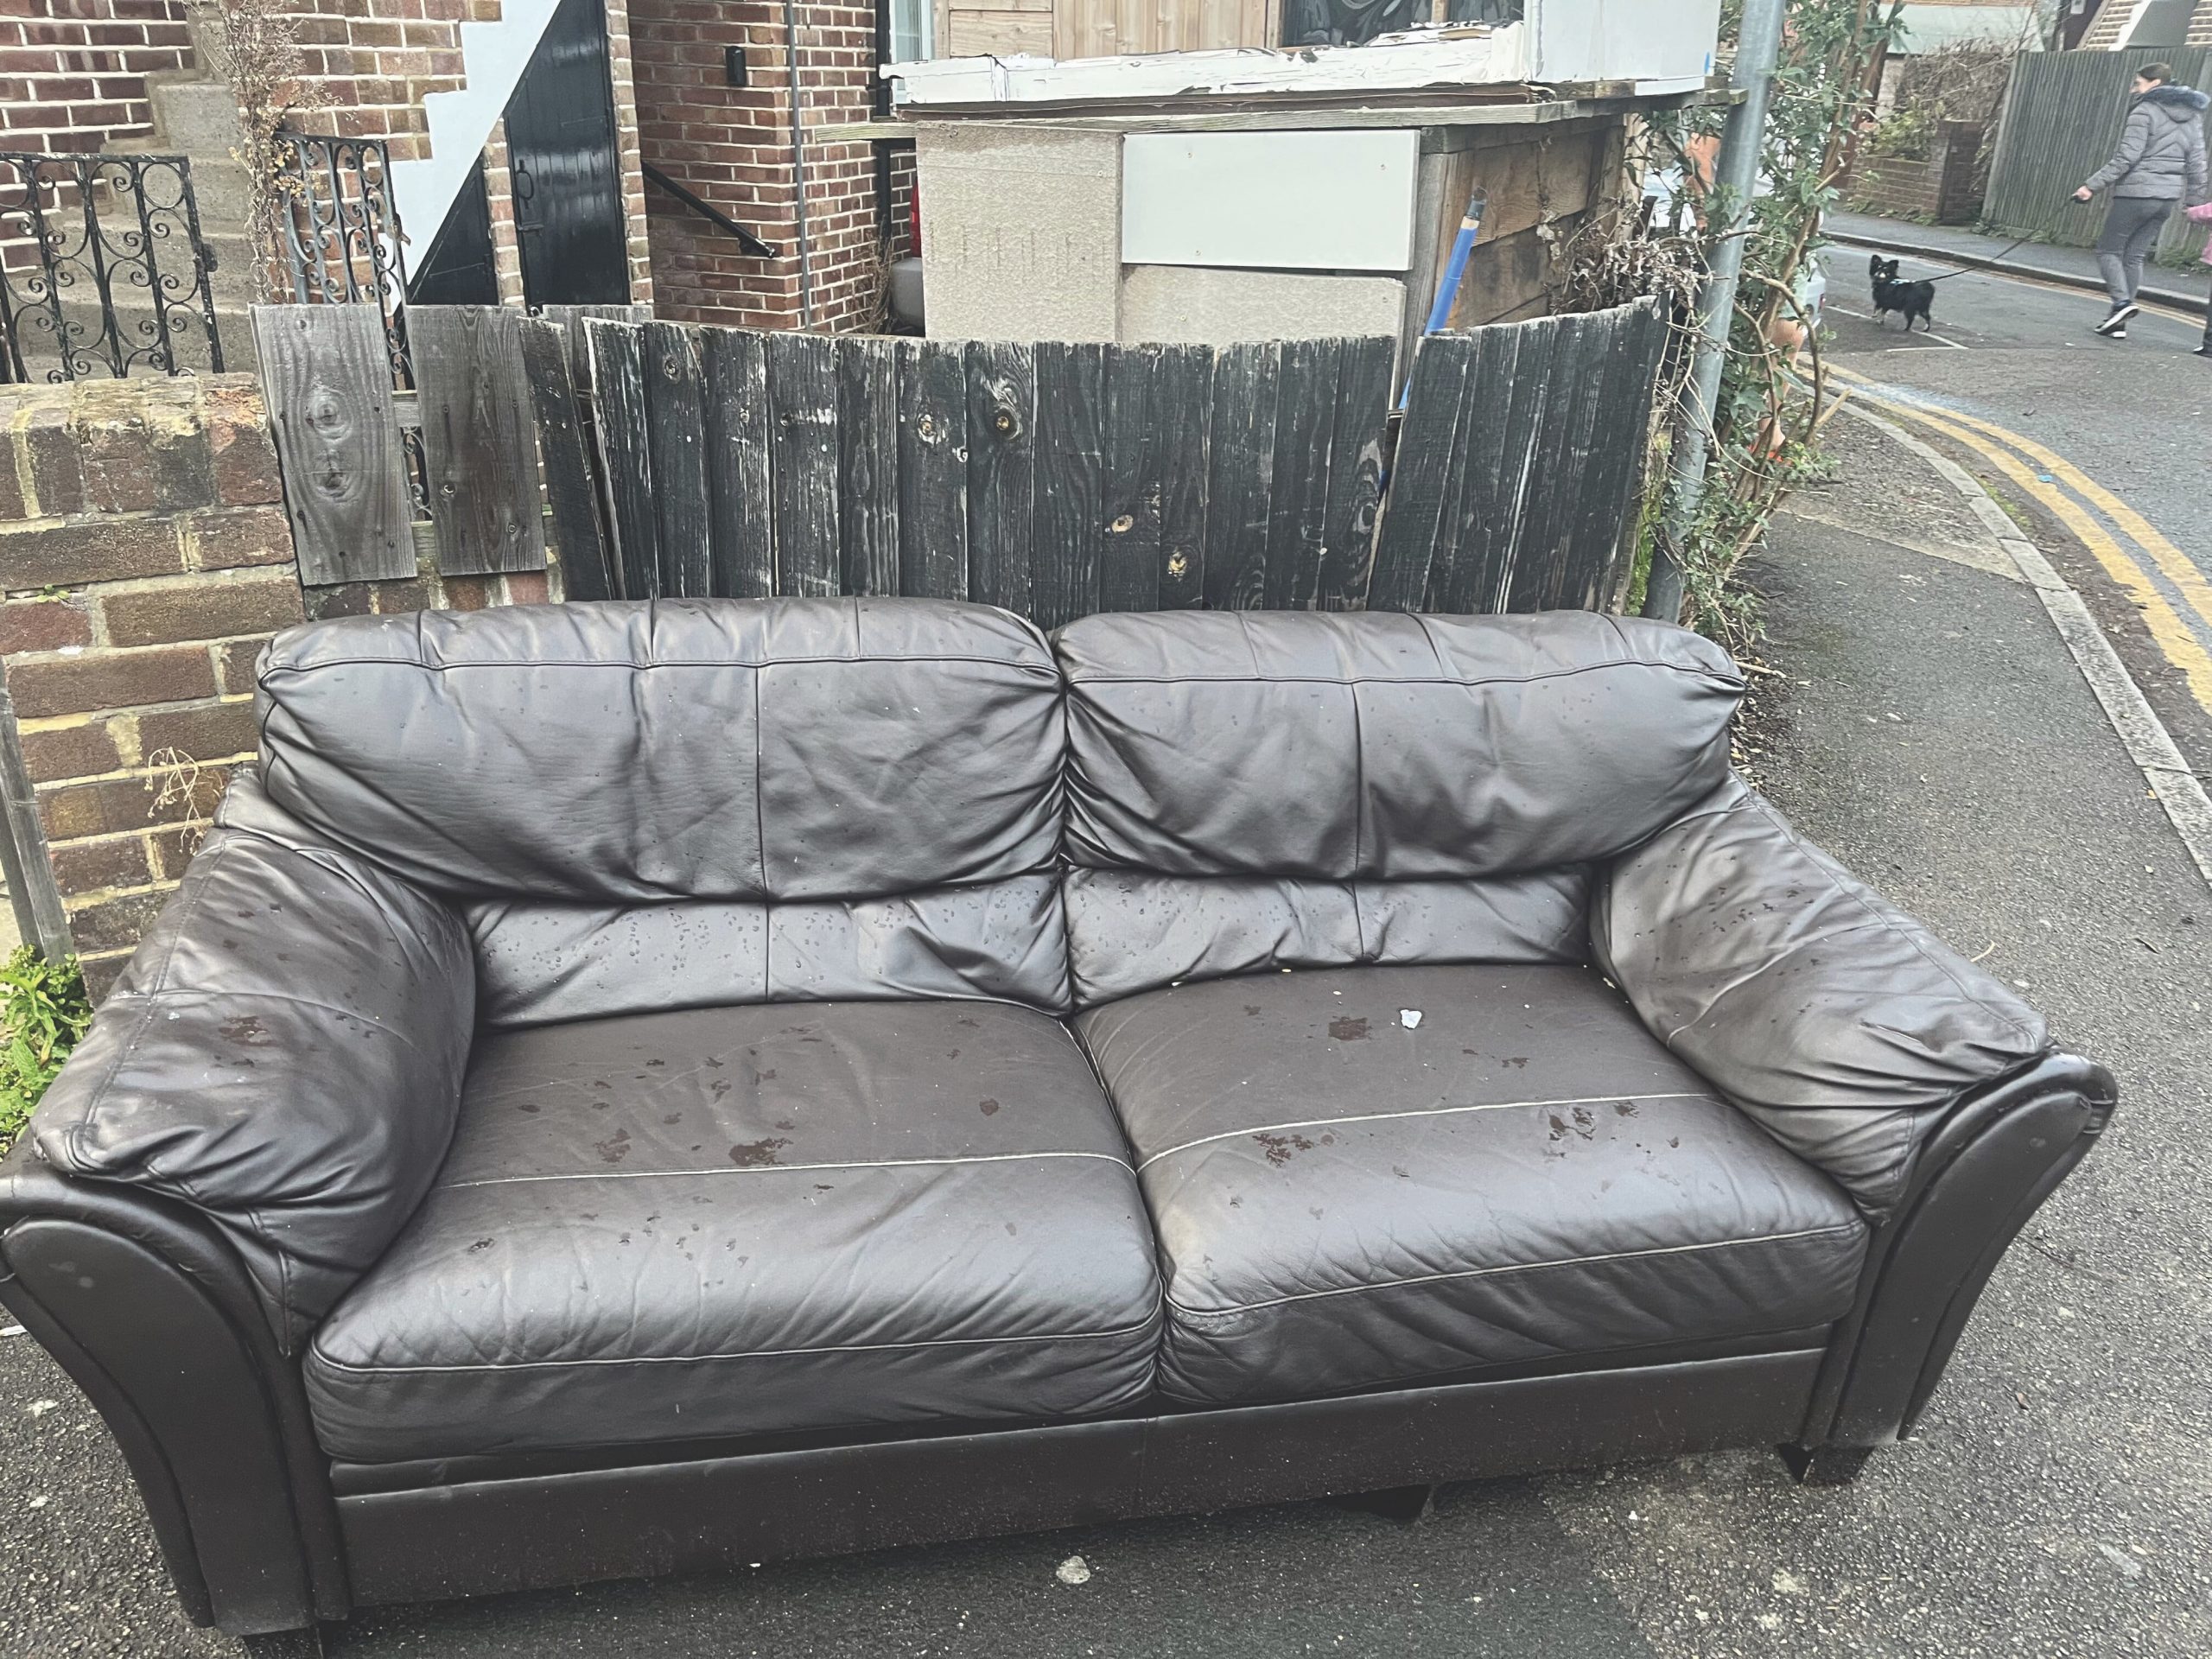 Sofa dumped outside house in Kingston Upon-Thames. Photo: William De Sousa